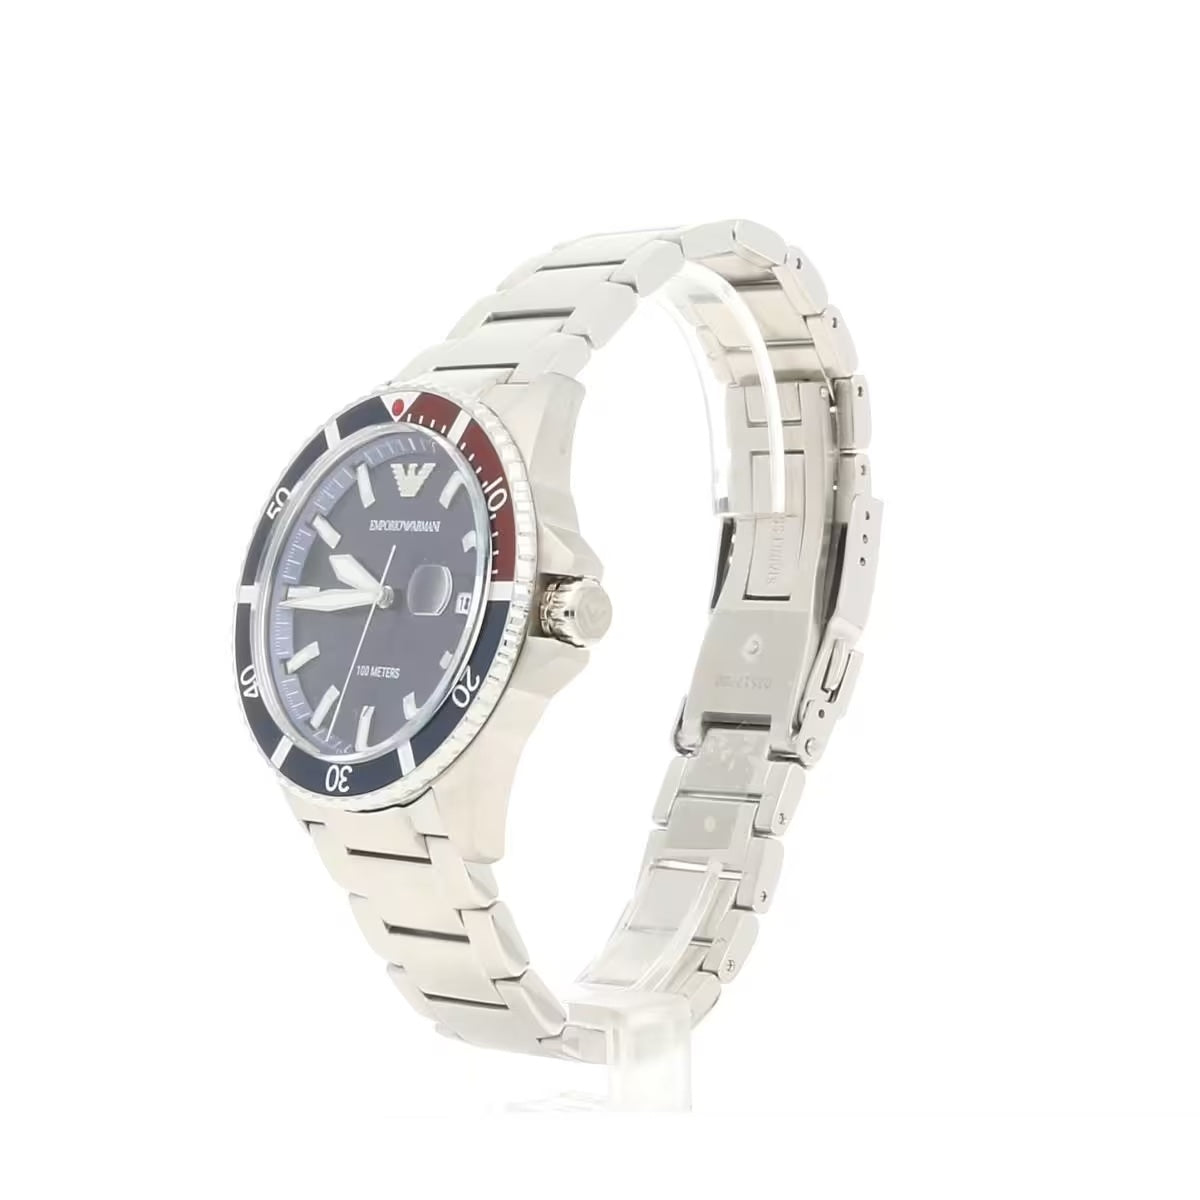 Elegant Steel Quartz Men's Watch – Ocean Blue Dial